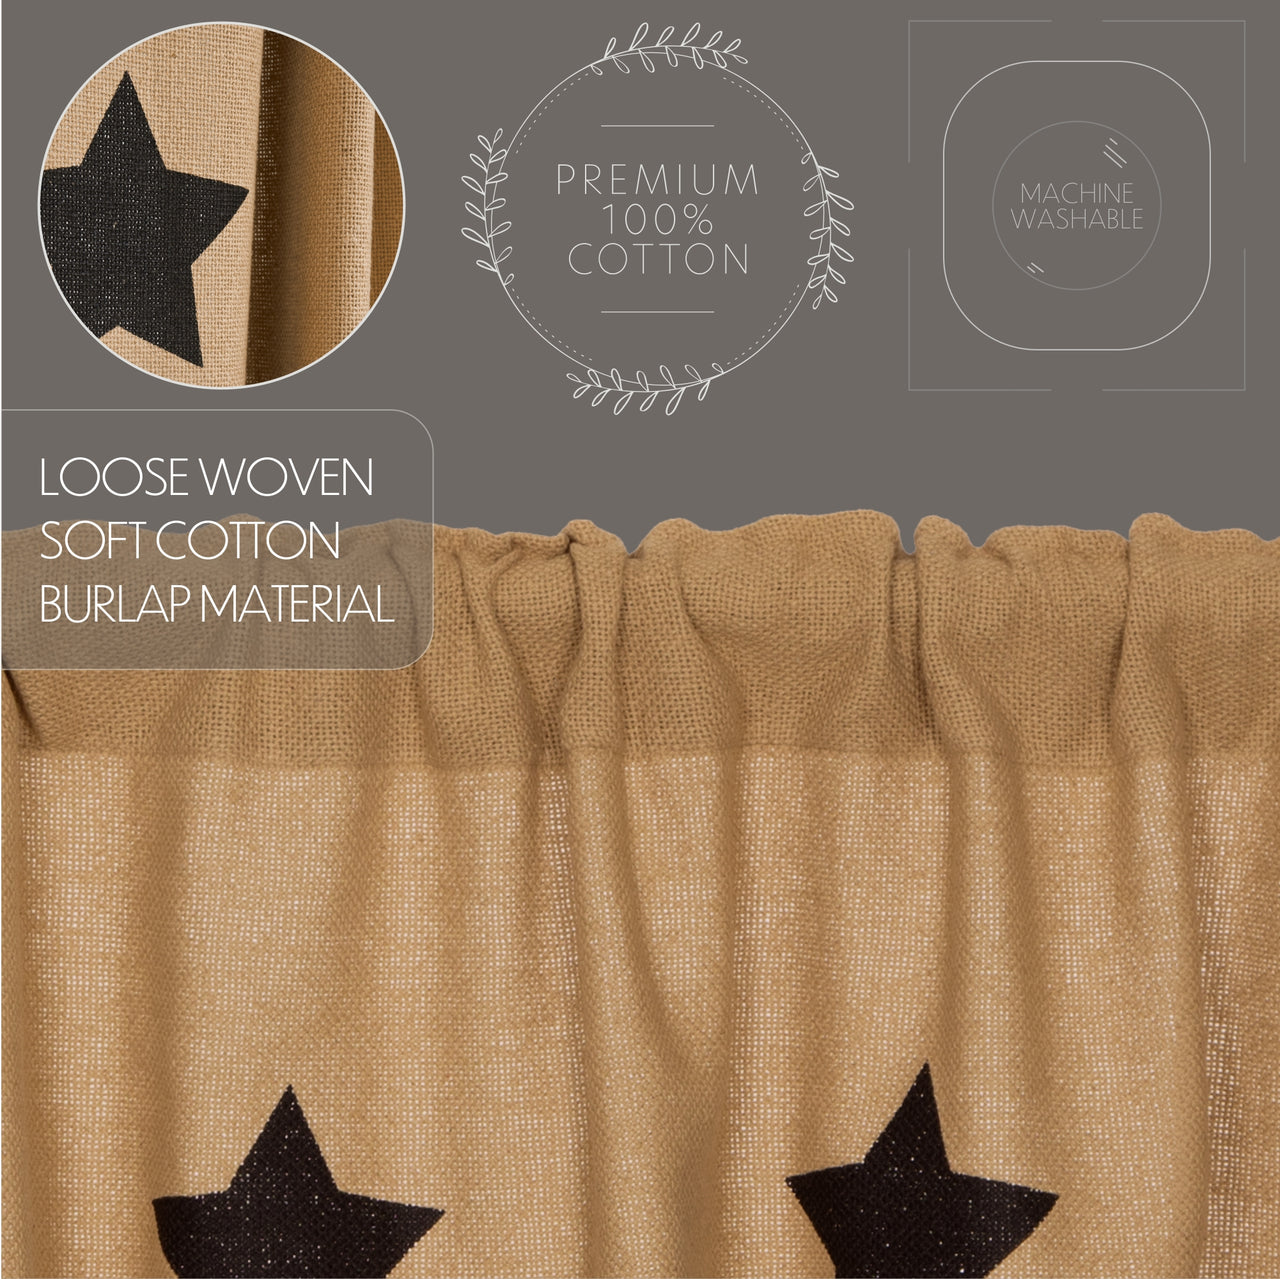 Burlap W/Black Stencil Stars Valance Curtain 16x60 VHC Brands